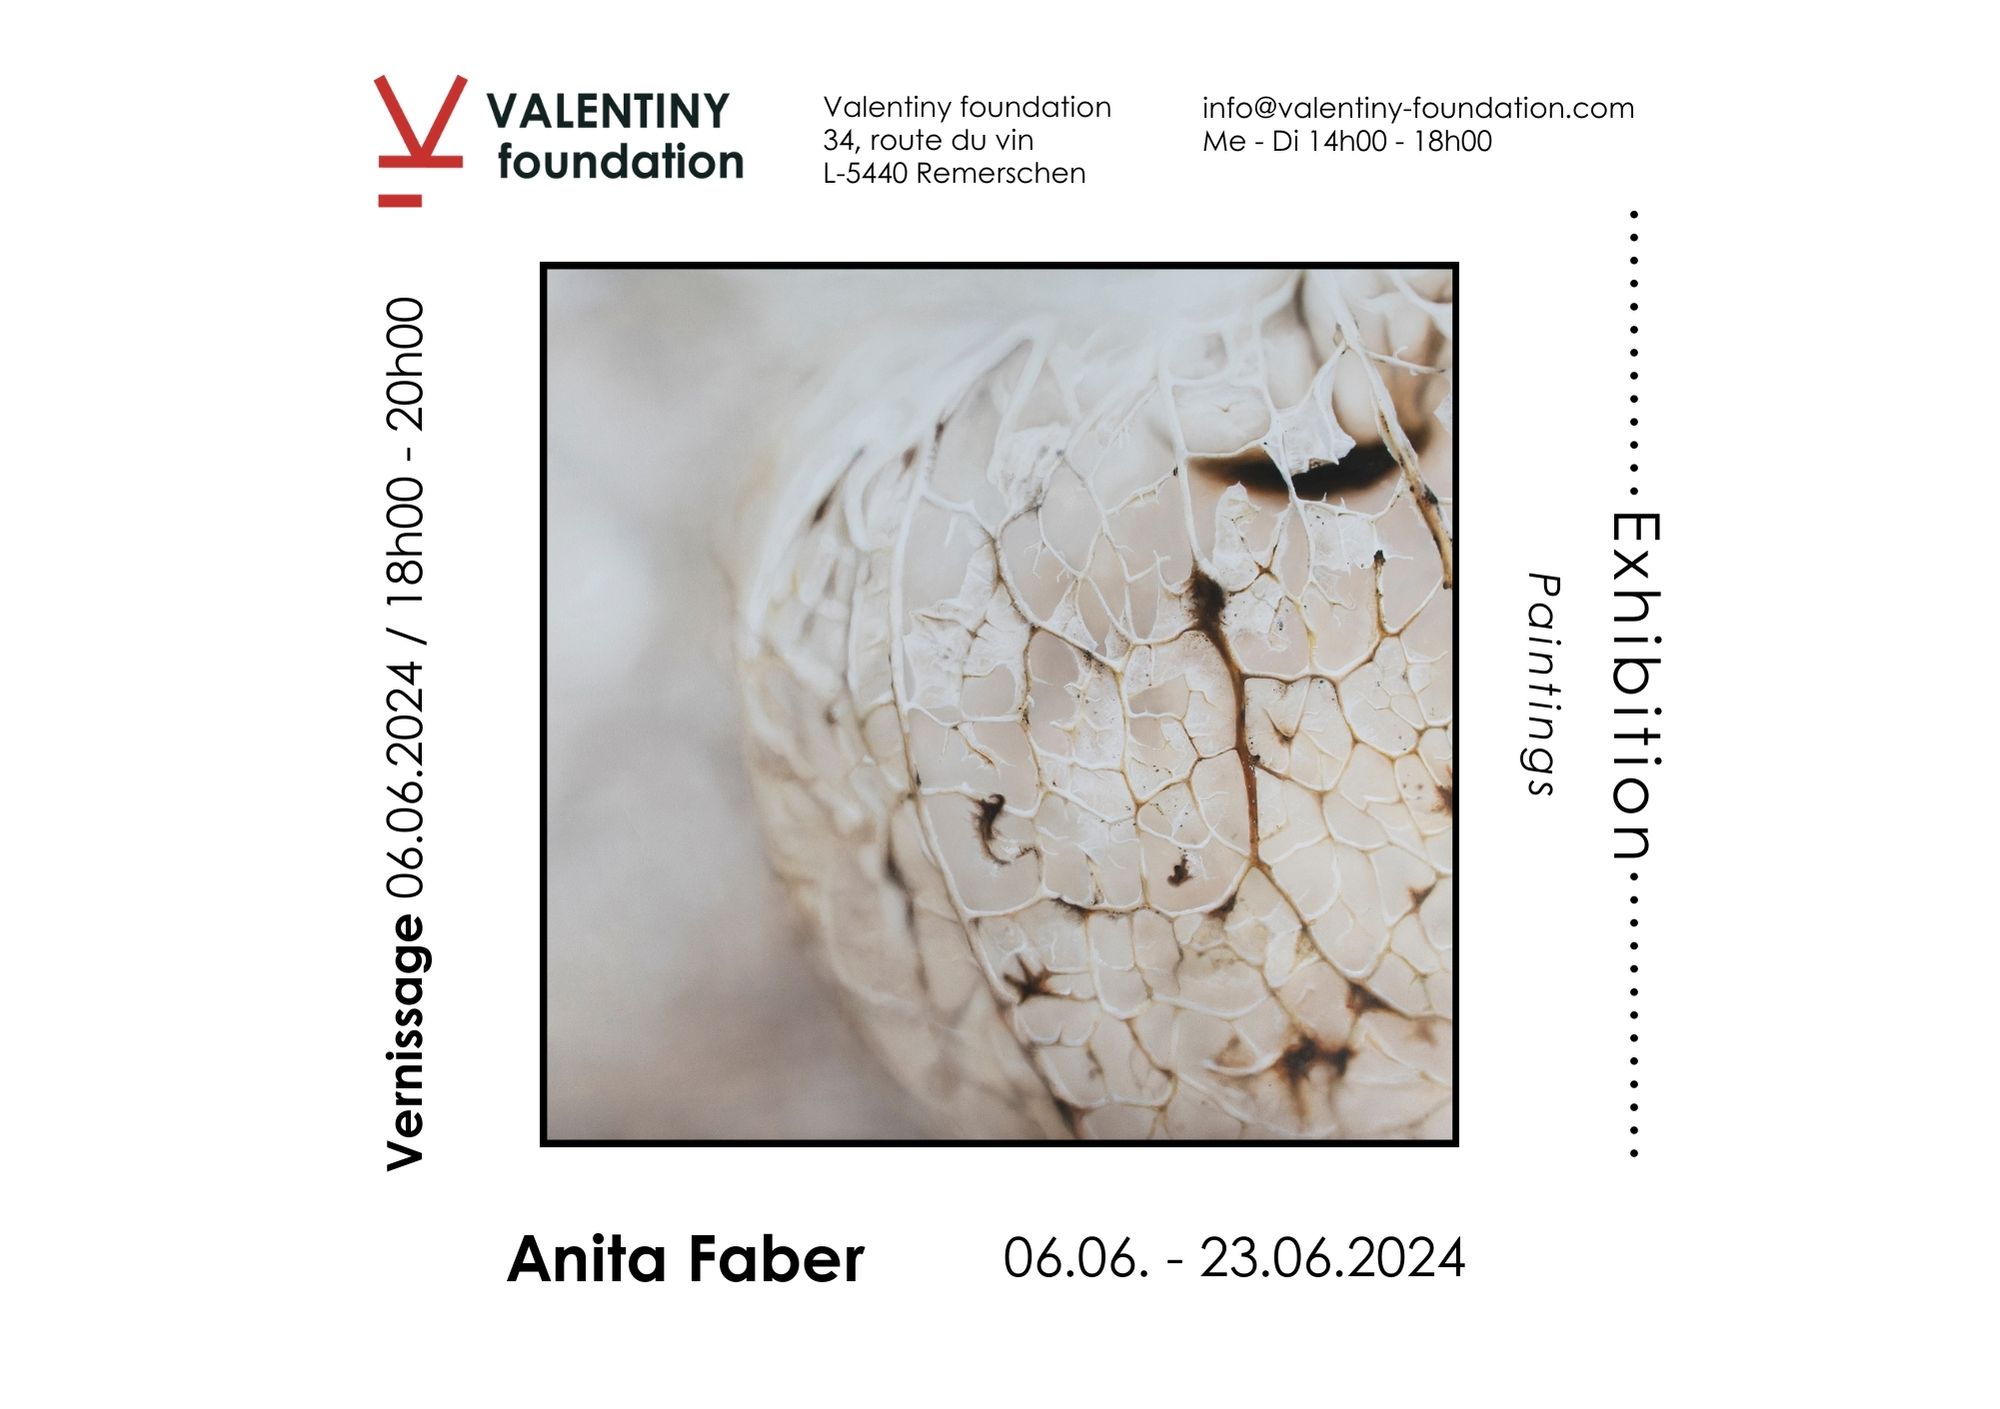 Exhibition of Anita Faber